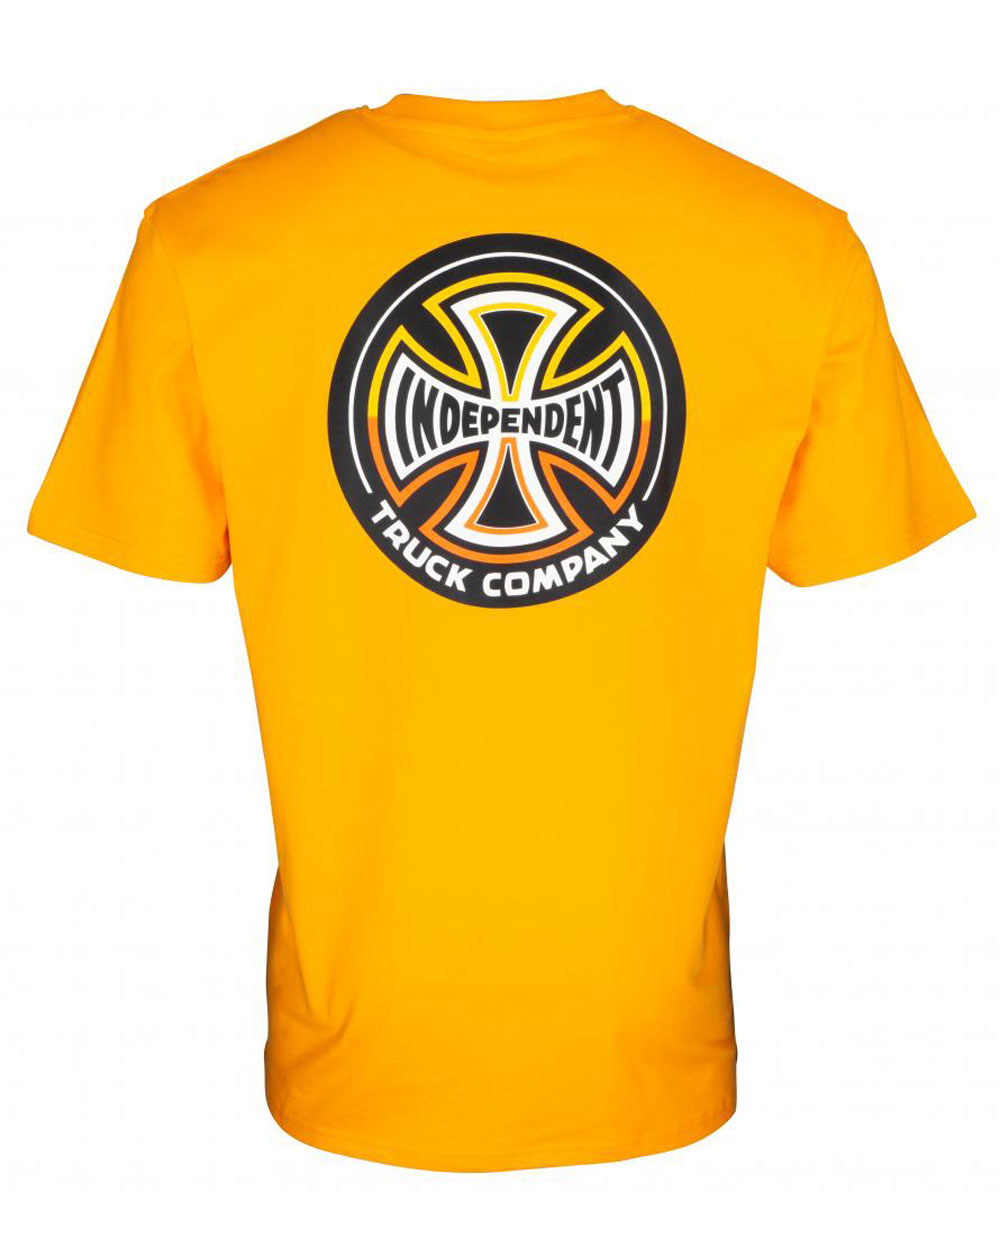 Independent Split Cross Camiseta para Homem Gold